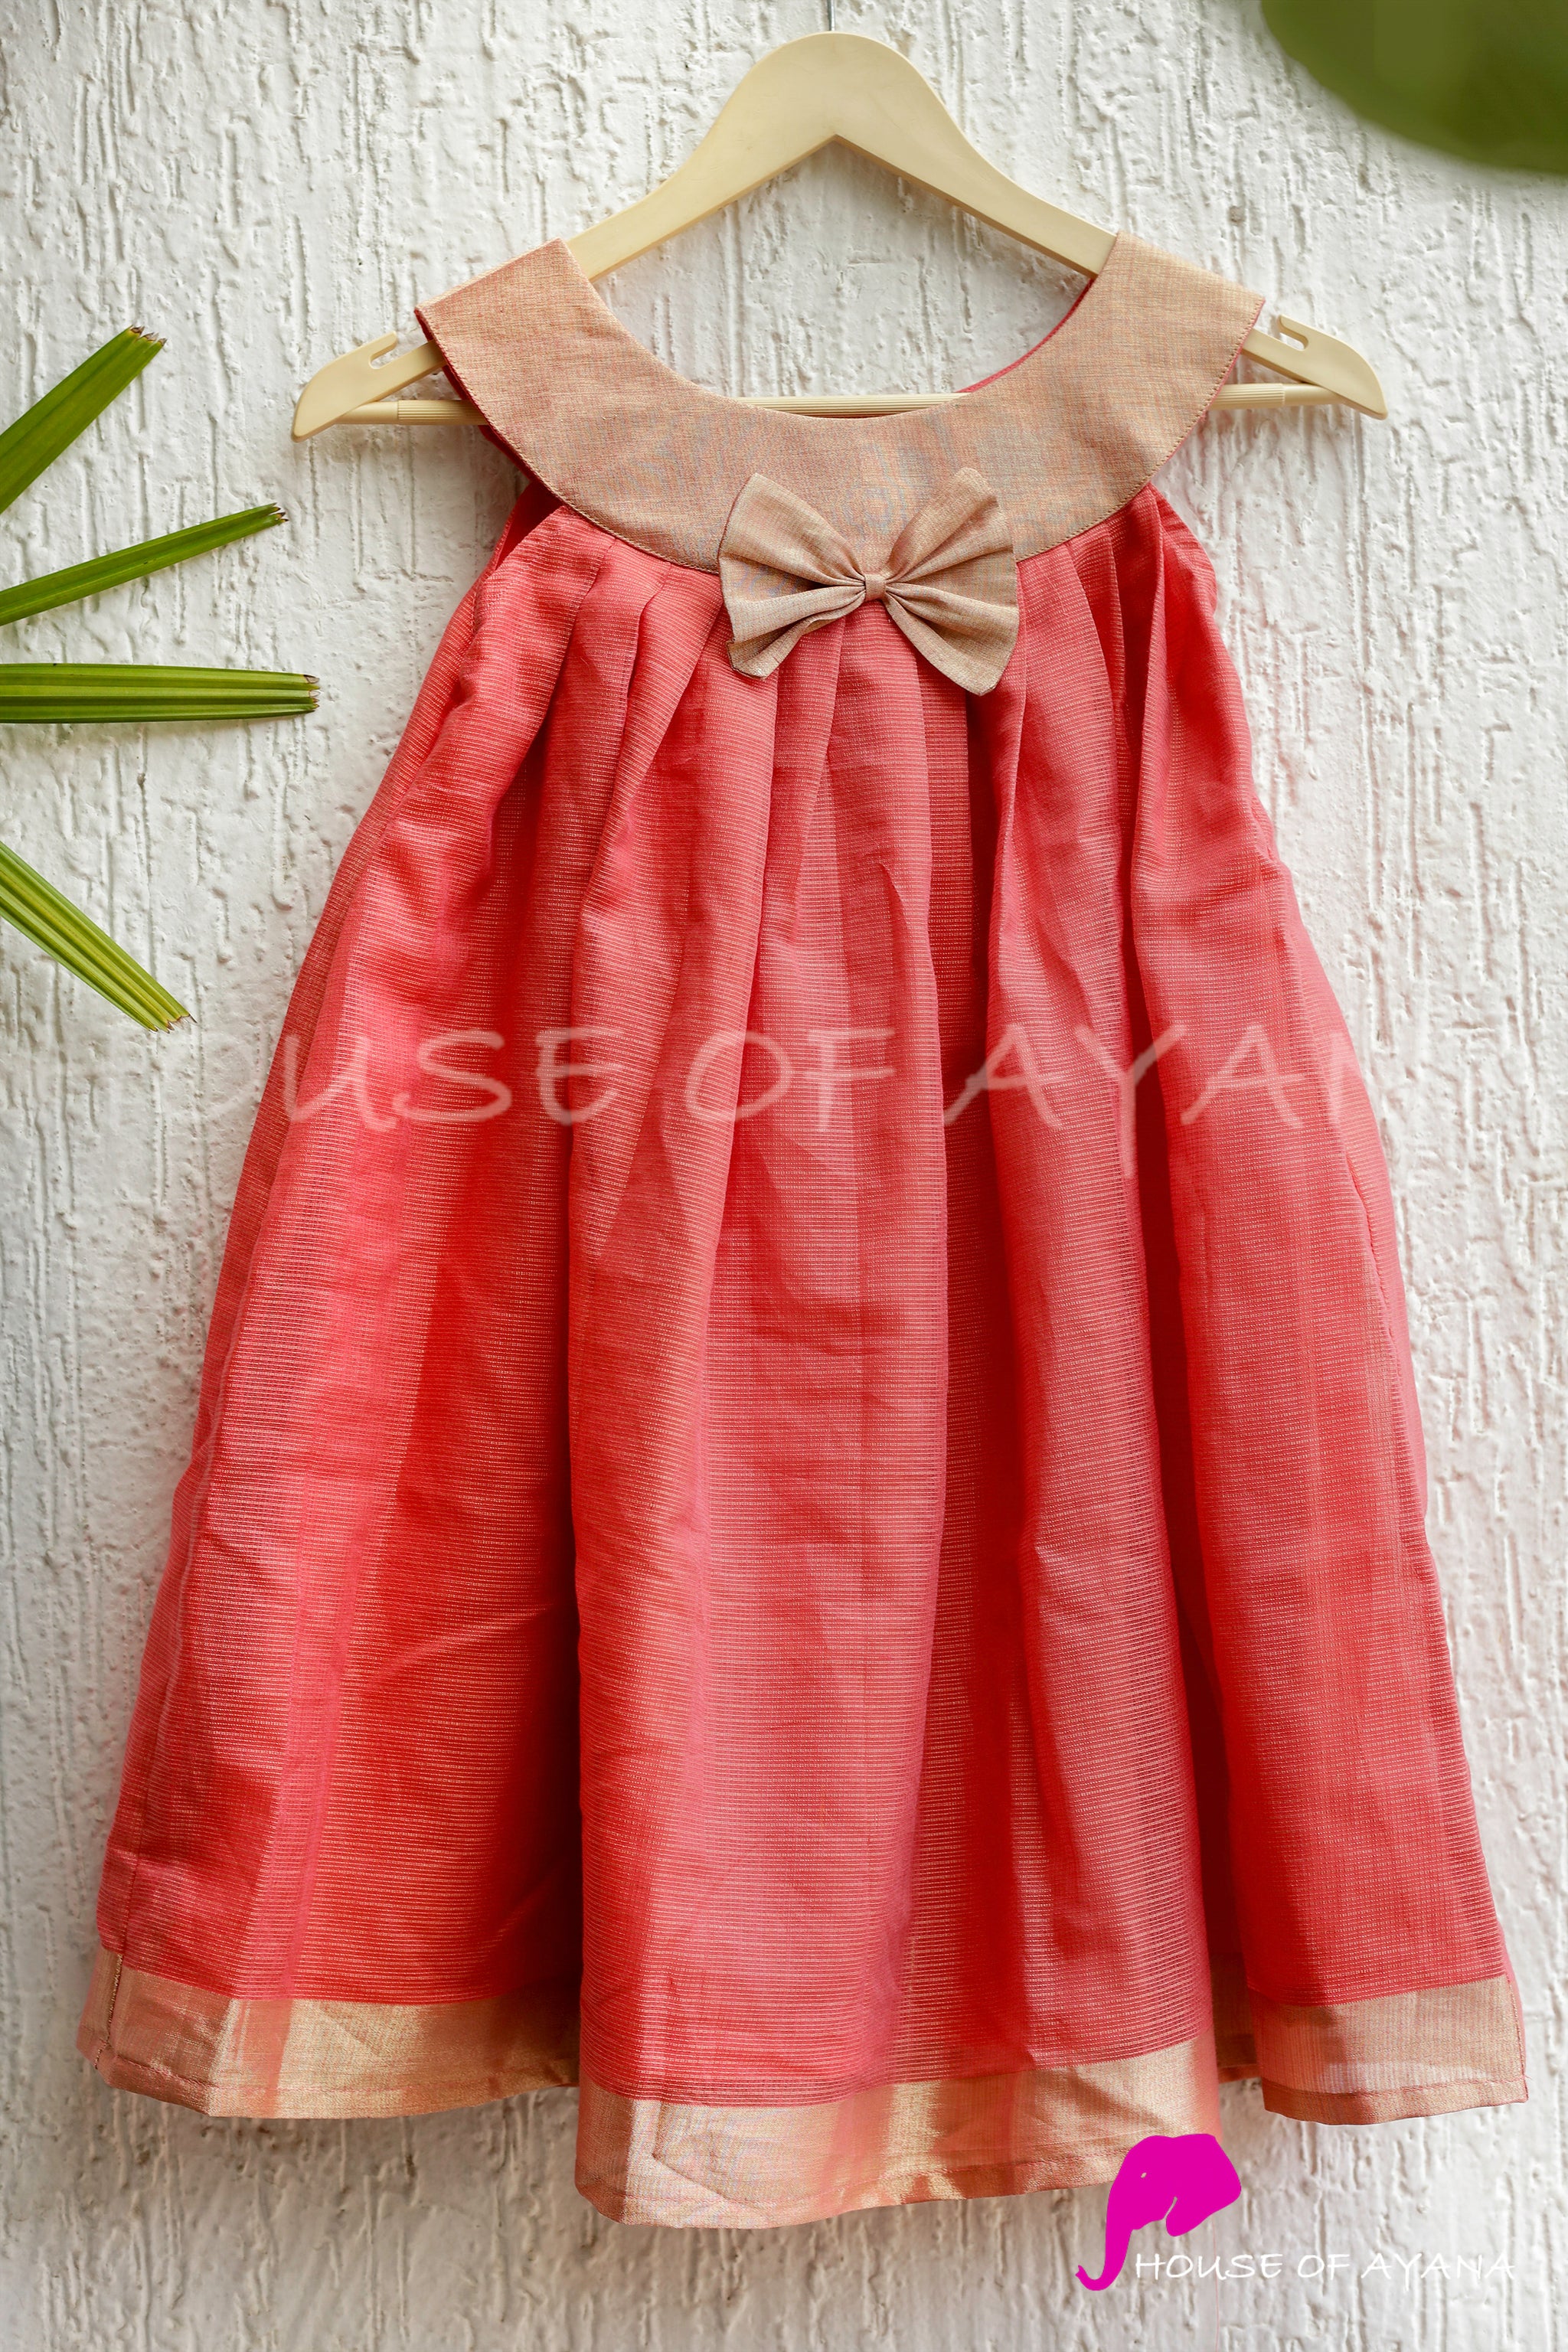 8 Stunning Dresses With Contrasting Yoke Patterns! | Stunning dresses,  Fancy dresses long, Pink pleated dress